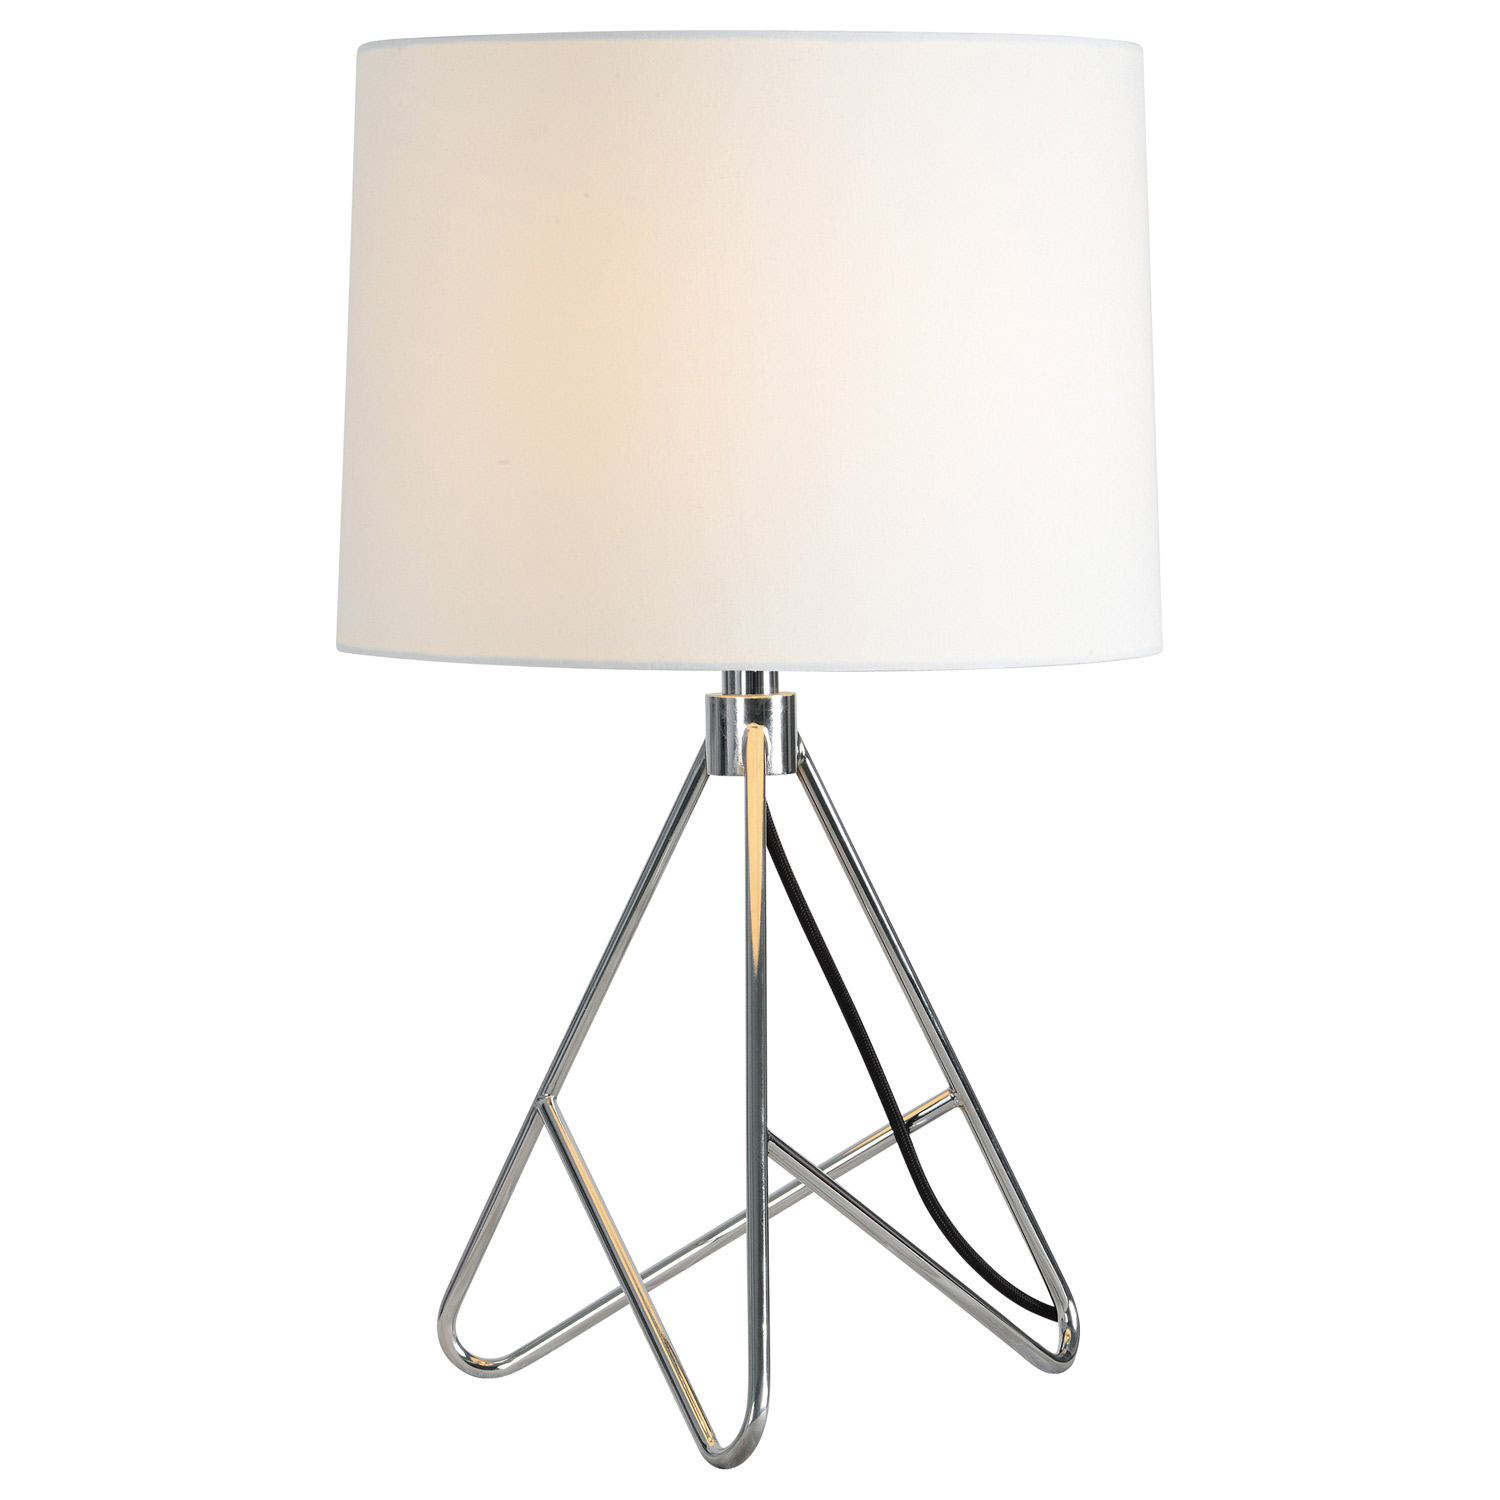 Ren-Wil Marshall Table Lamp - Chrome